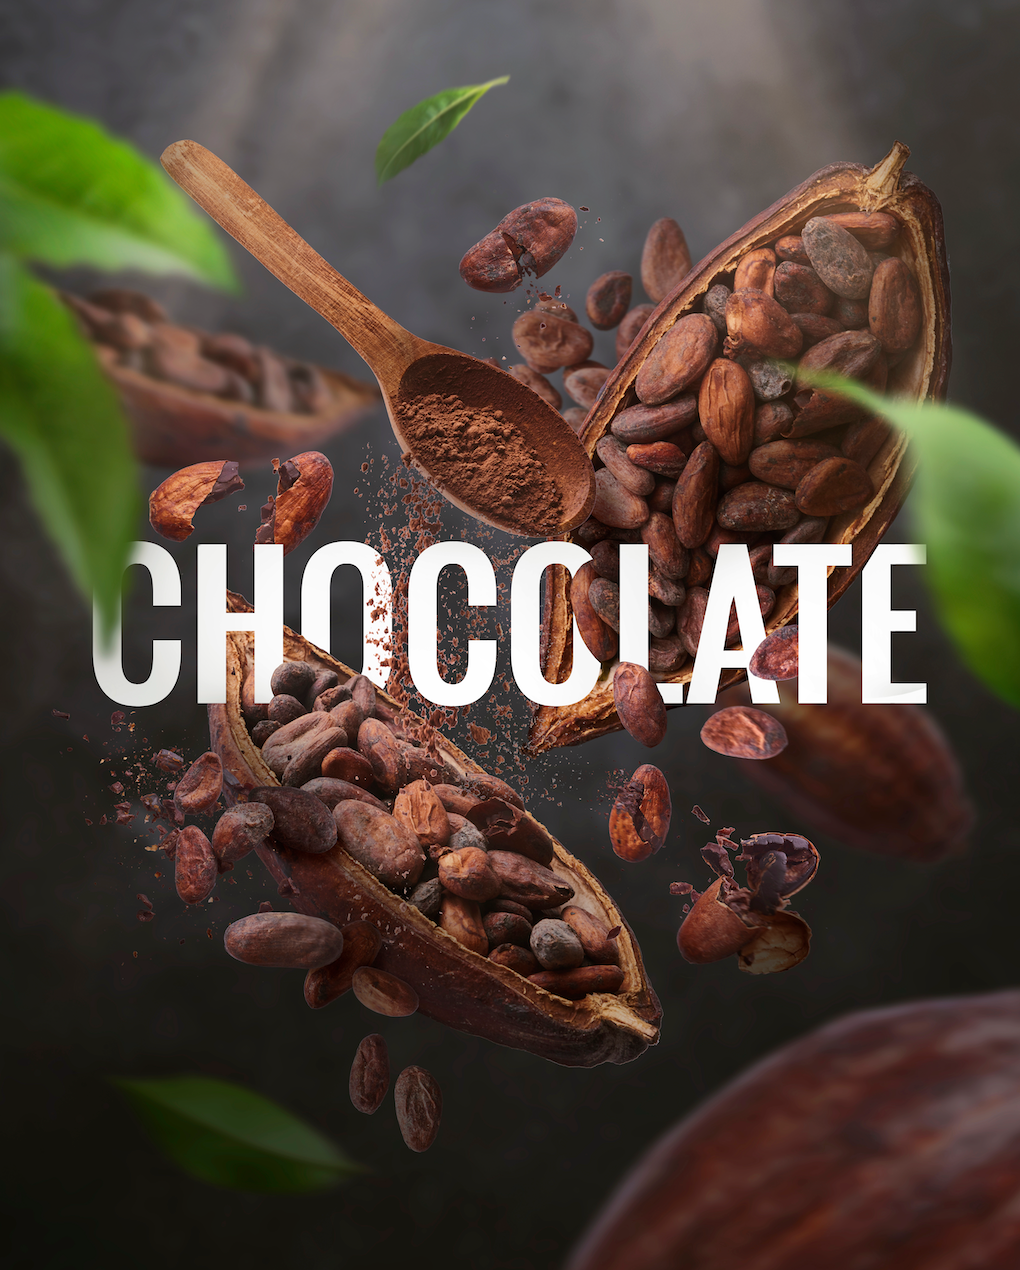 Dark Chocolate - The Ultimate Super Food!